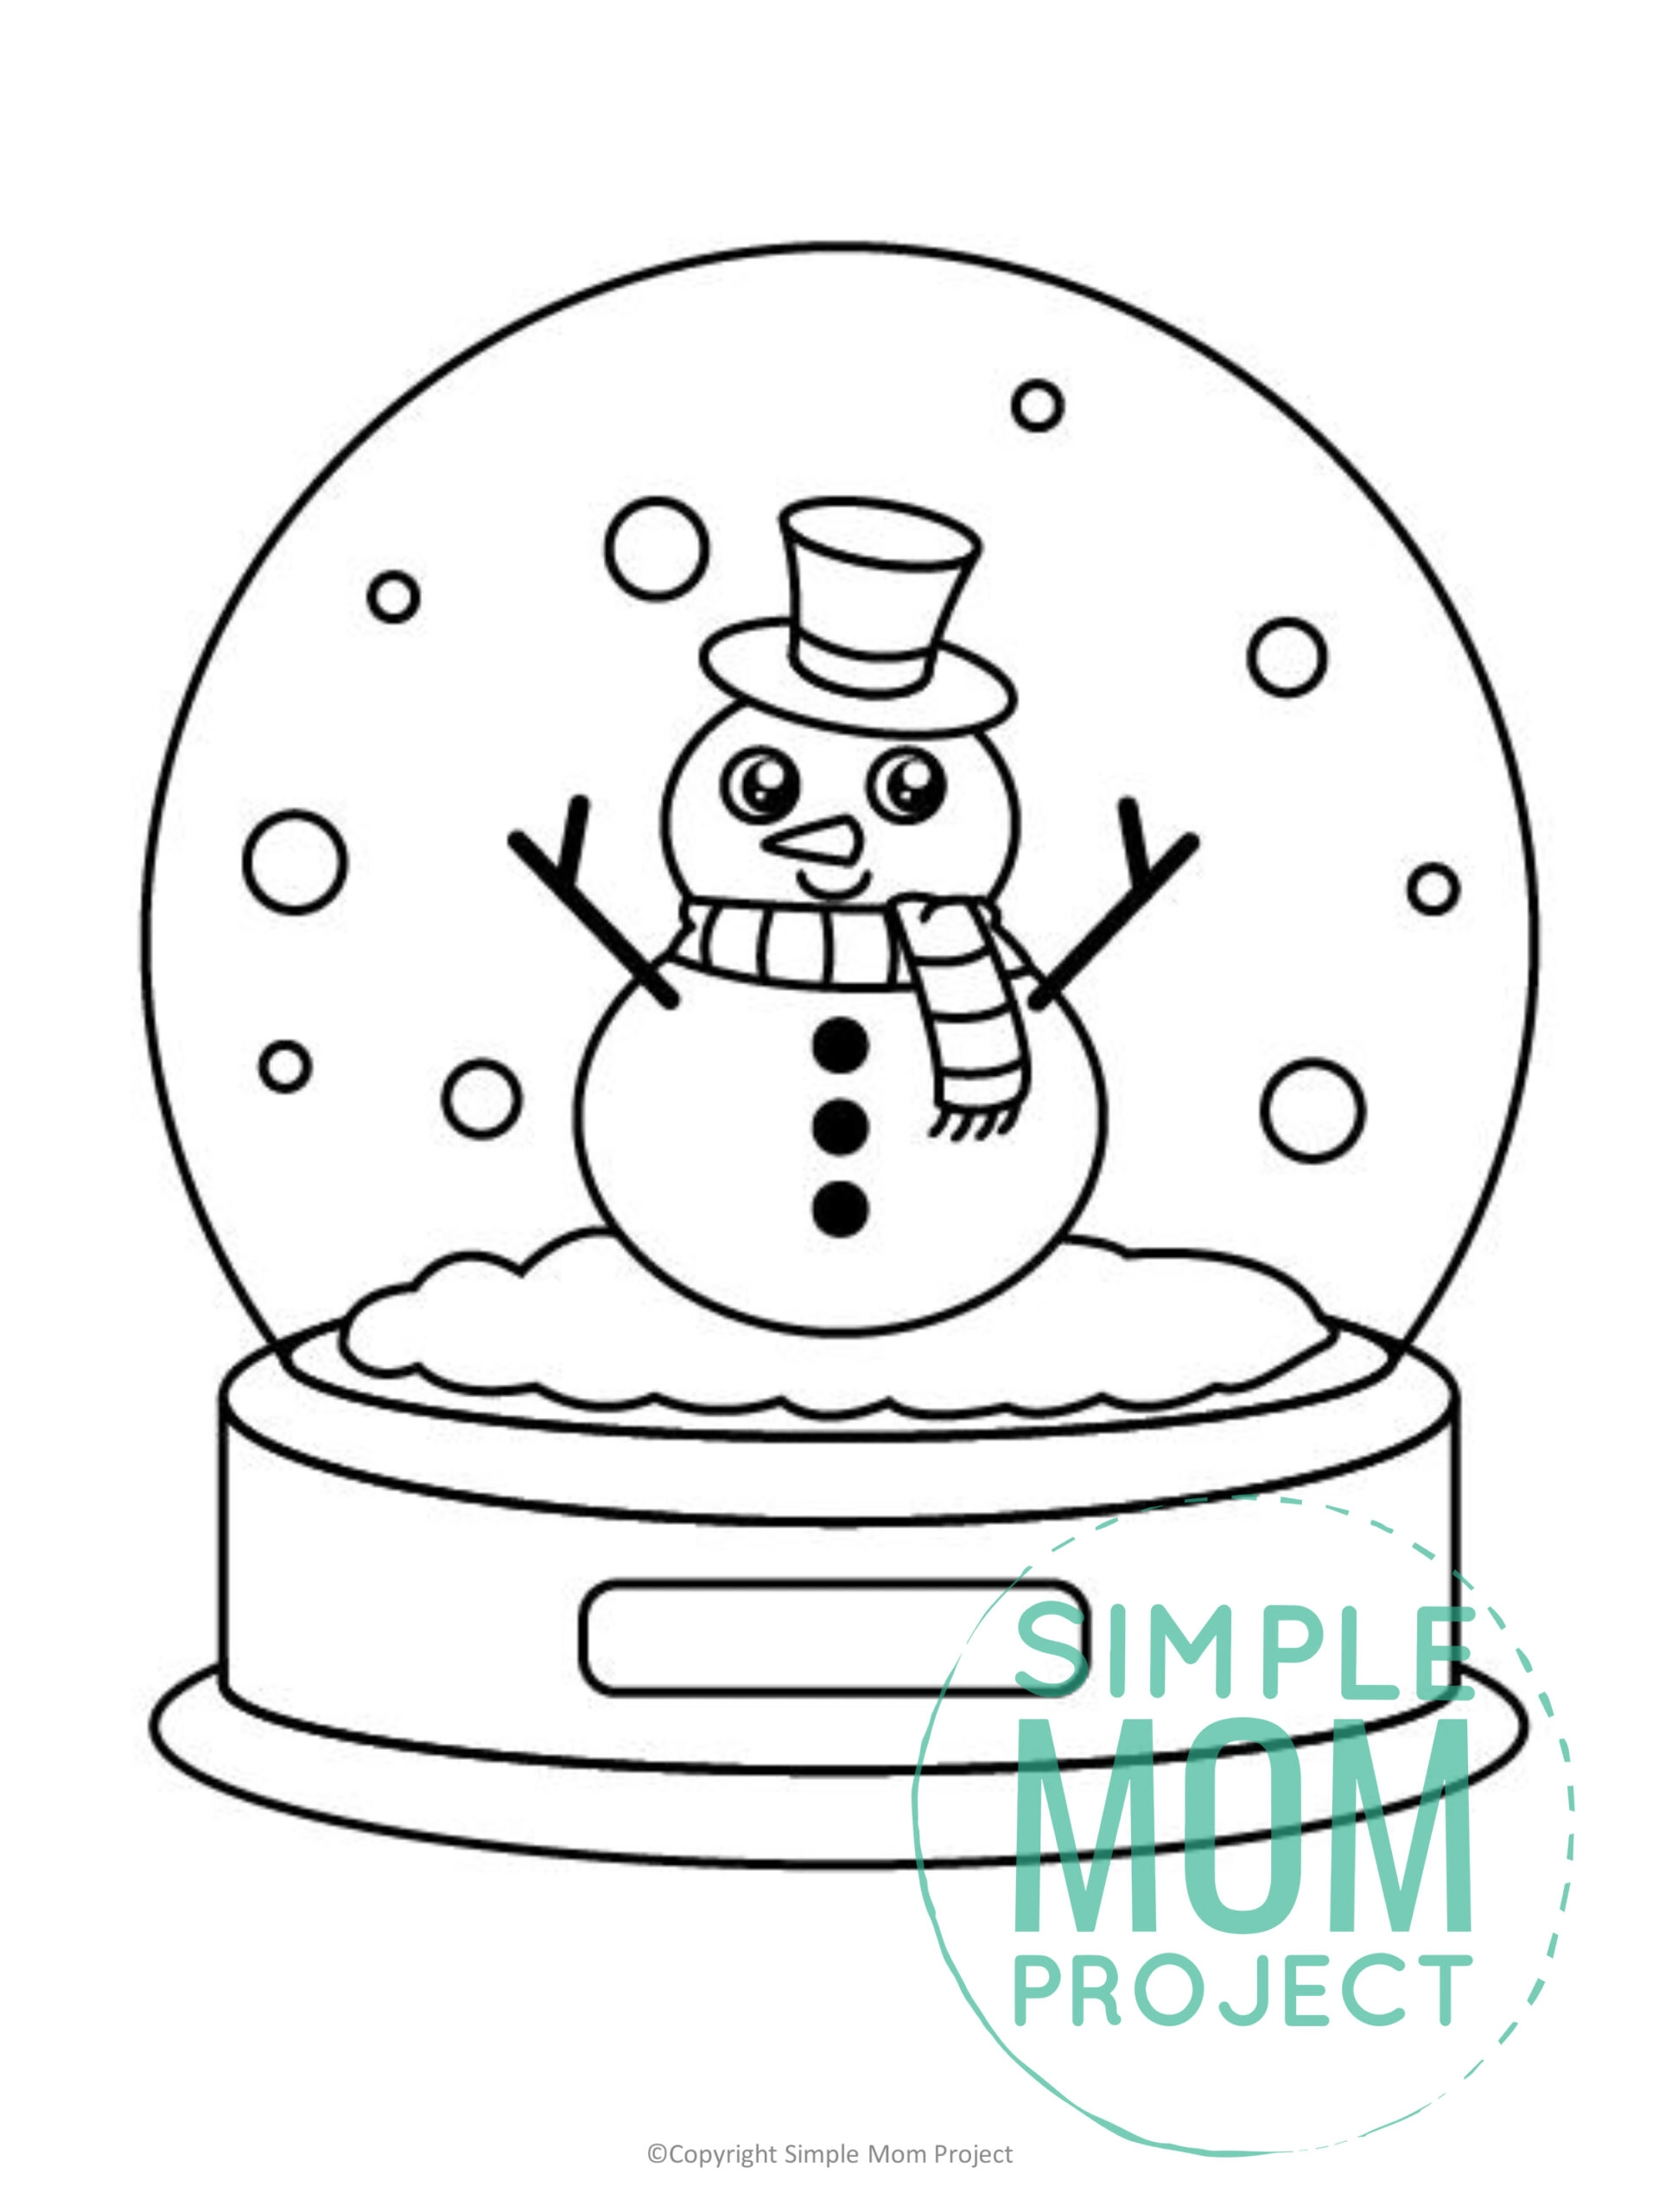 Free printable snow globe template â simple mom project